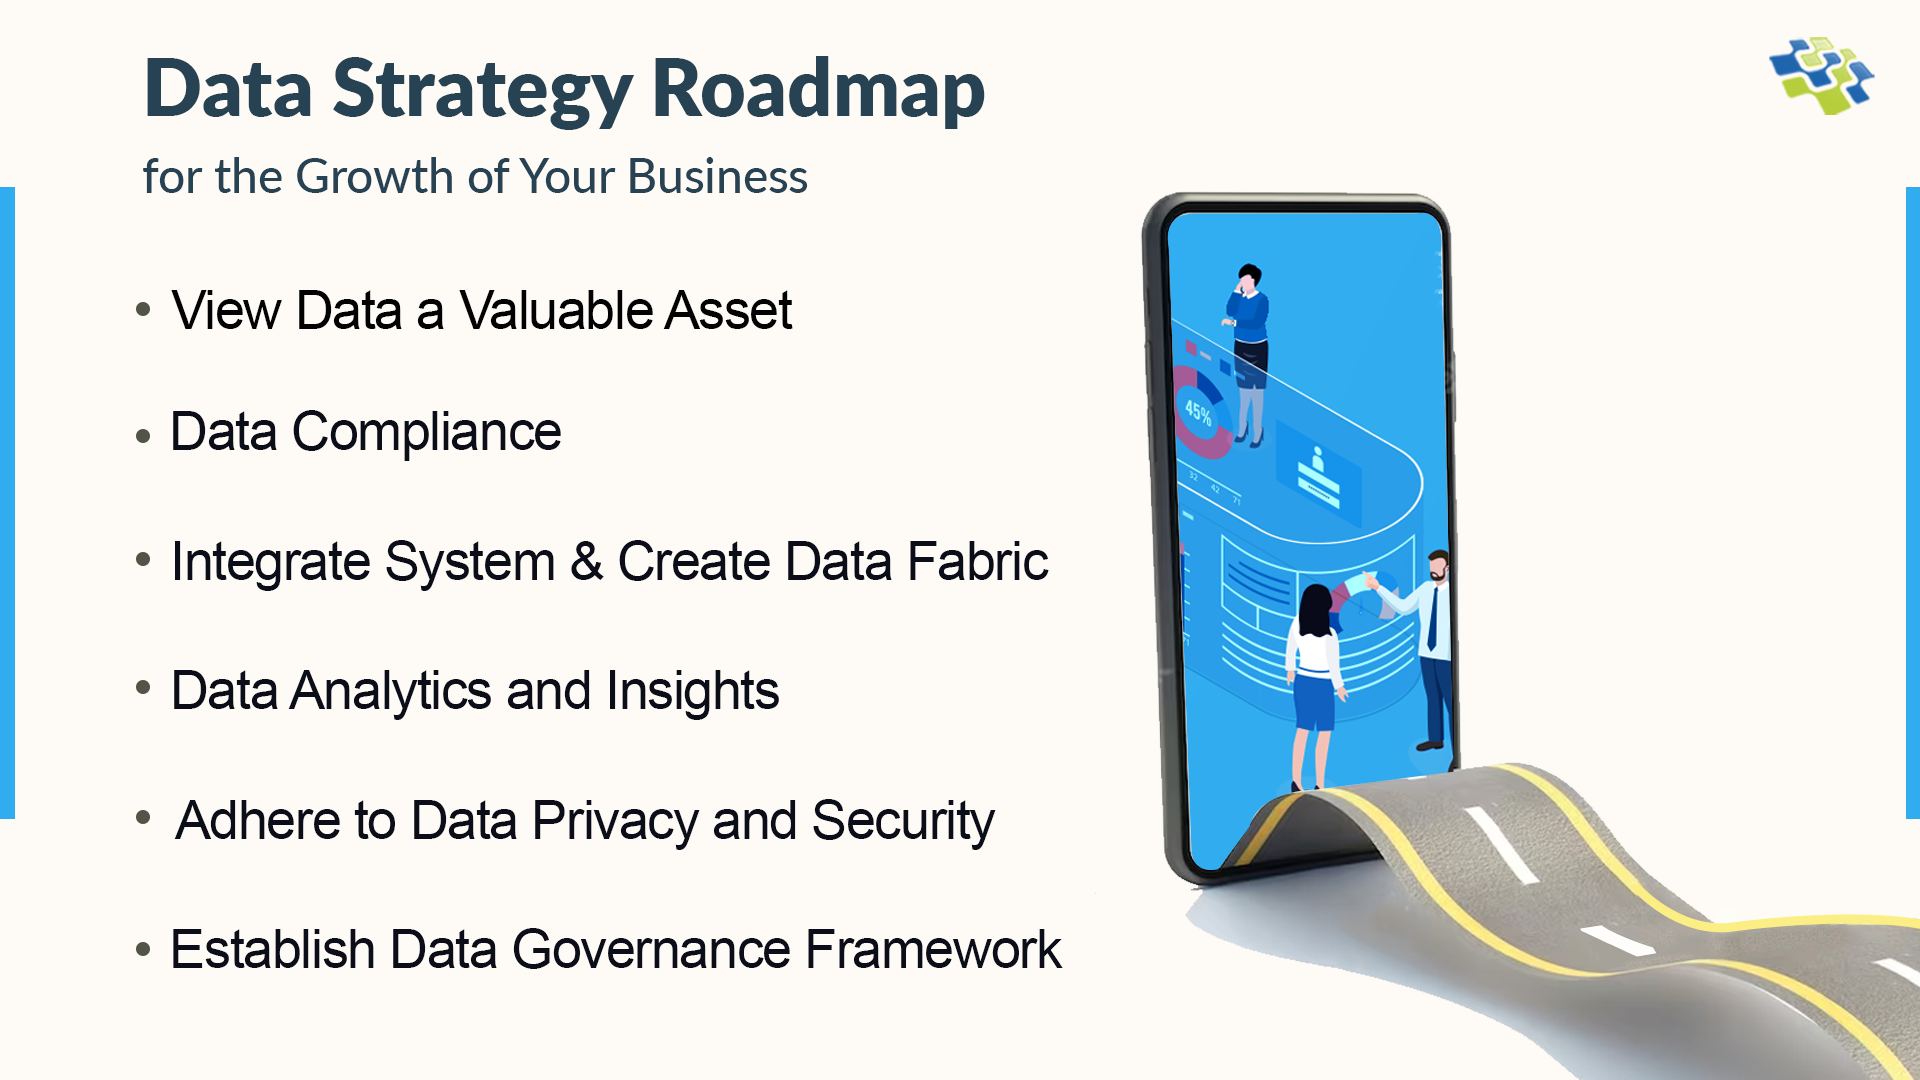 Data strategy roadmap points